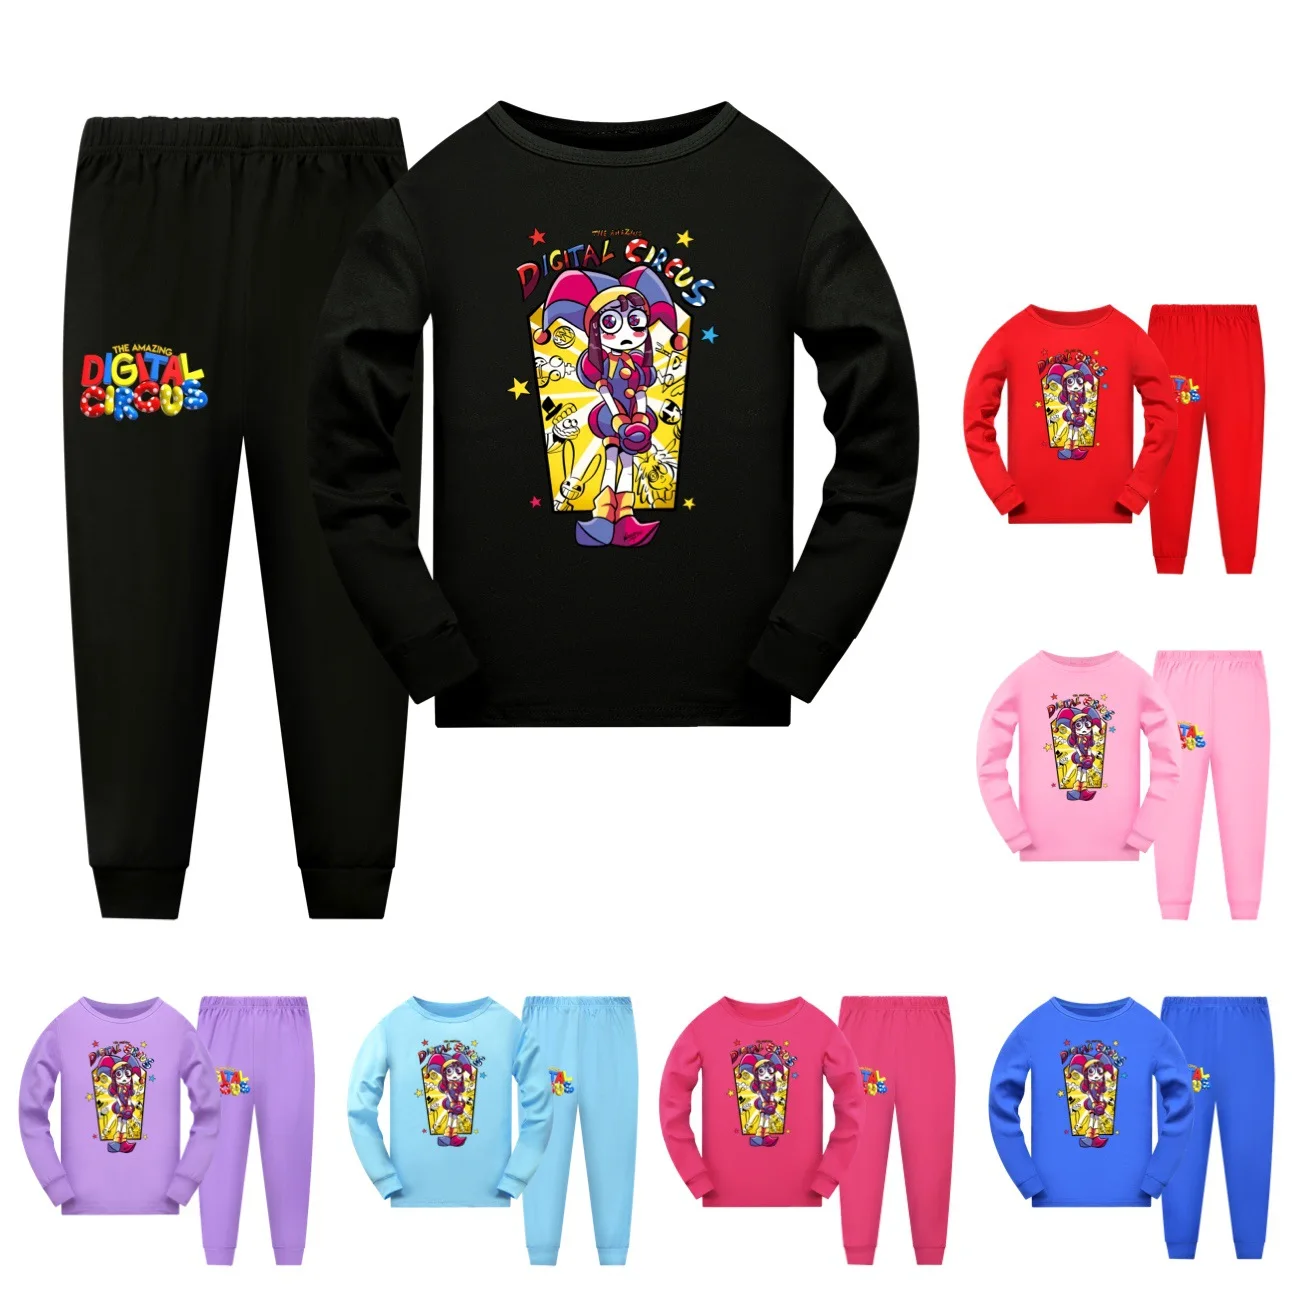 

The Amazing Digital Circus Merch Clothes Kids Pomni Jax Pyjamas Girls Long Sleeve T Shirt Pants 2pcs Sets Boys Casual Sleepwear